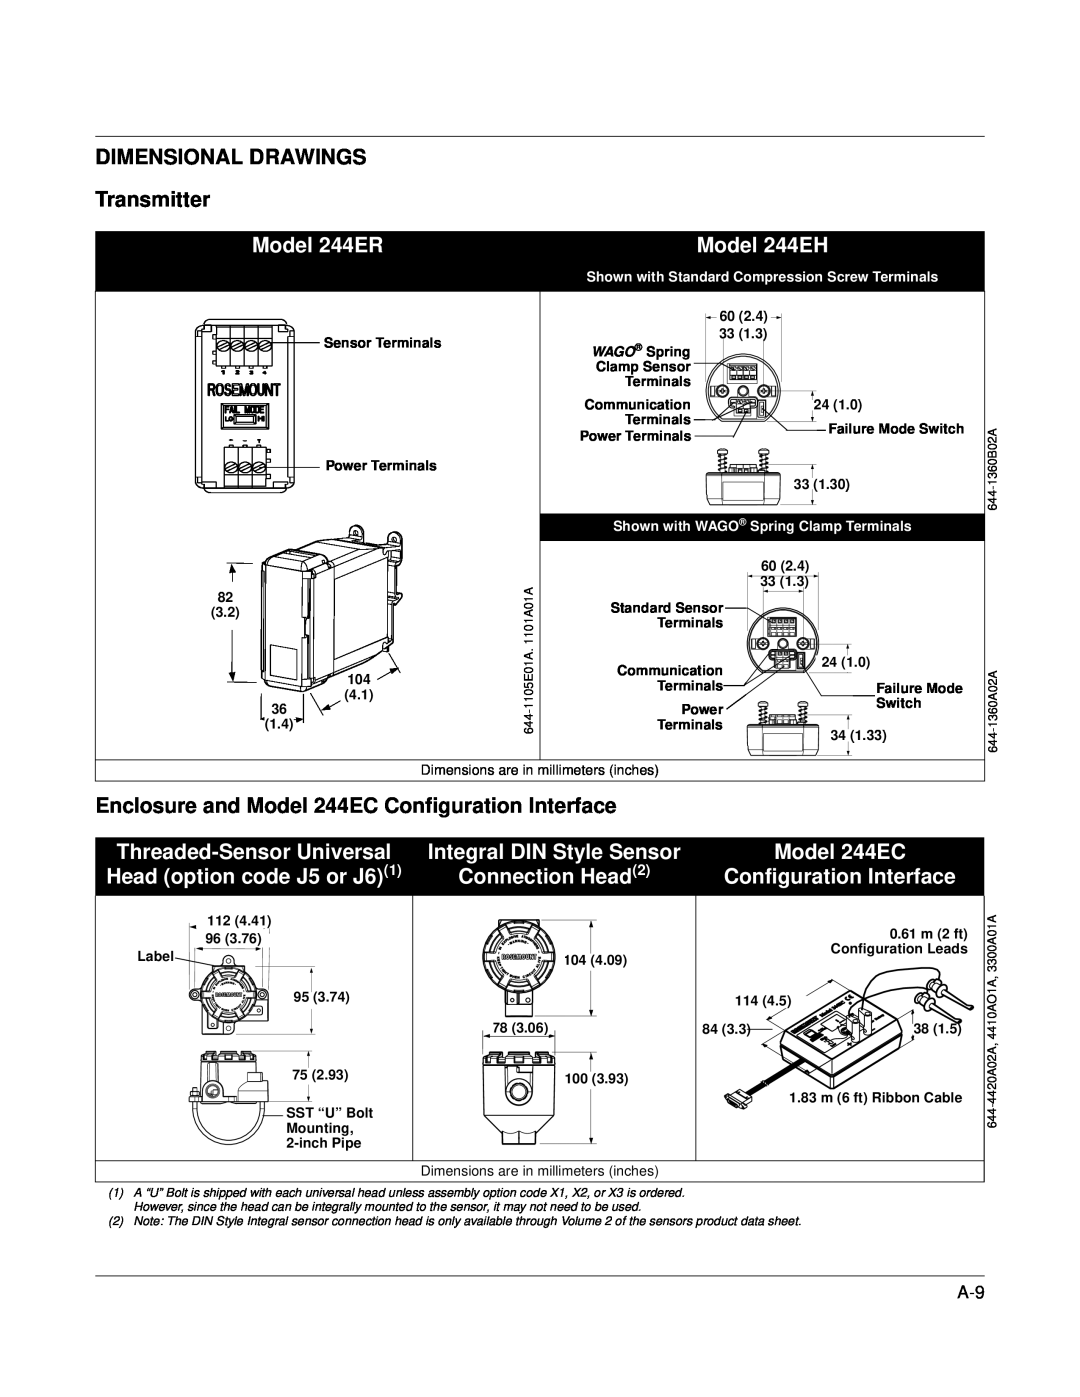 Fisher DIMENSIONAL DRAWINGS Transmitter, Model 244ER, Model 244EH, Enclosure and Model 244EC Configuration Interface 